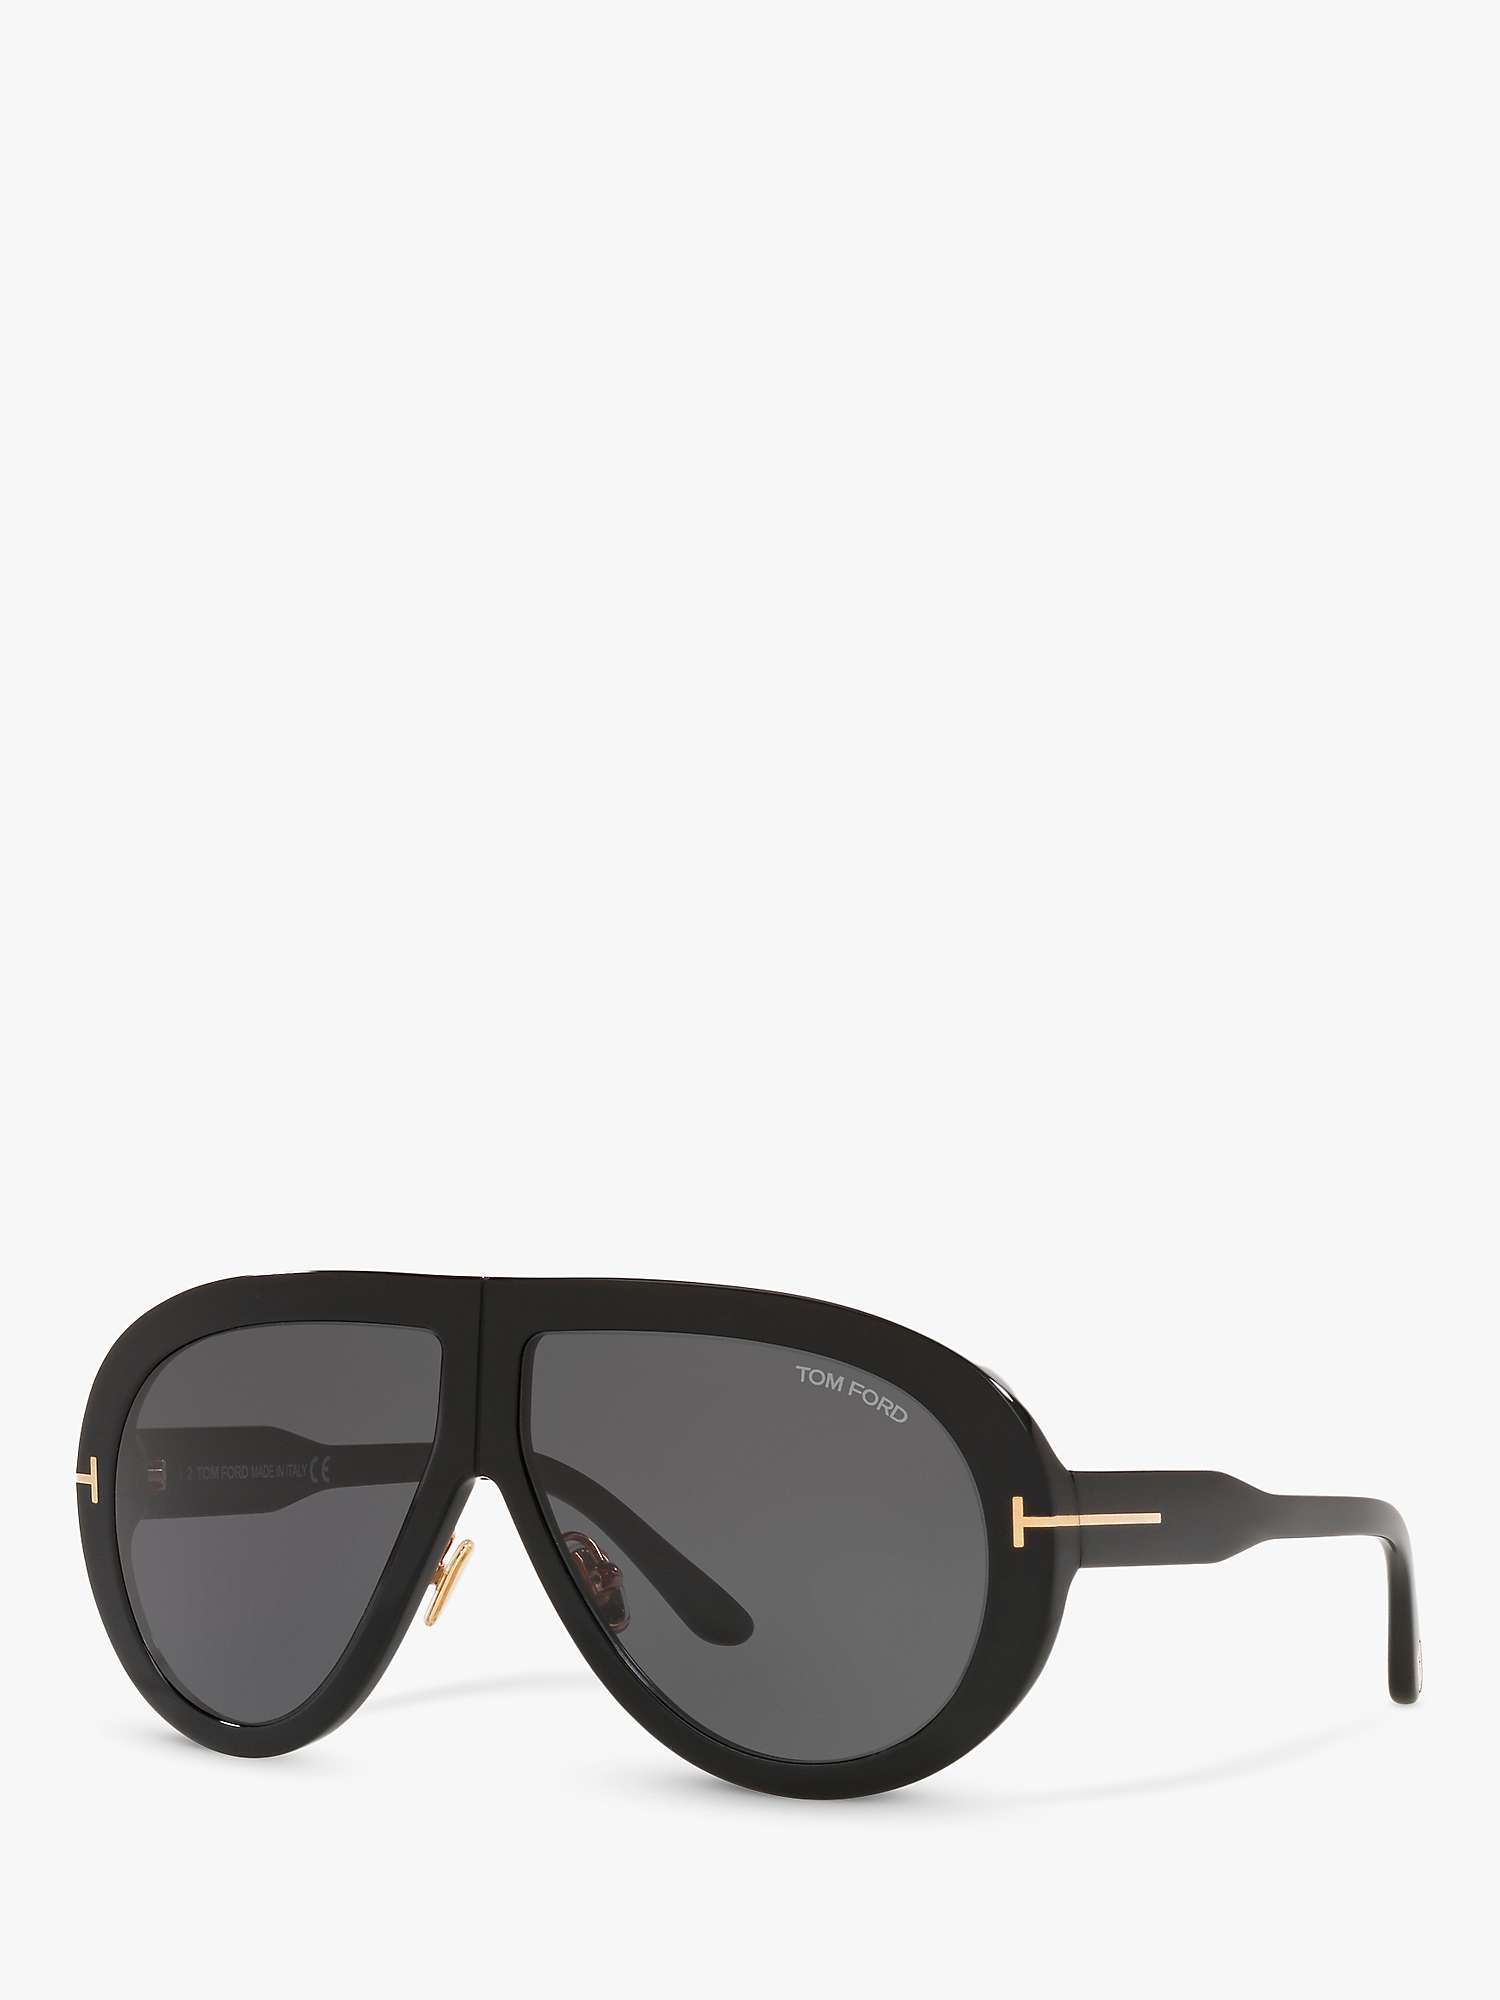 Buy TOM FORD FT0836 Unisex Troy Aviator Sunglasses, Black/Grey Online at johnlewis.com